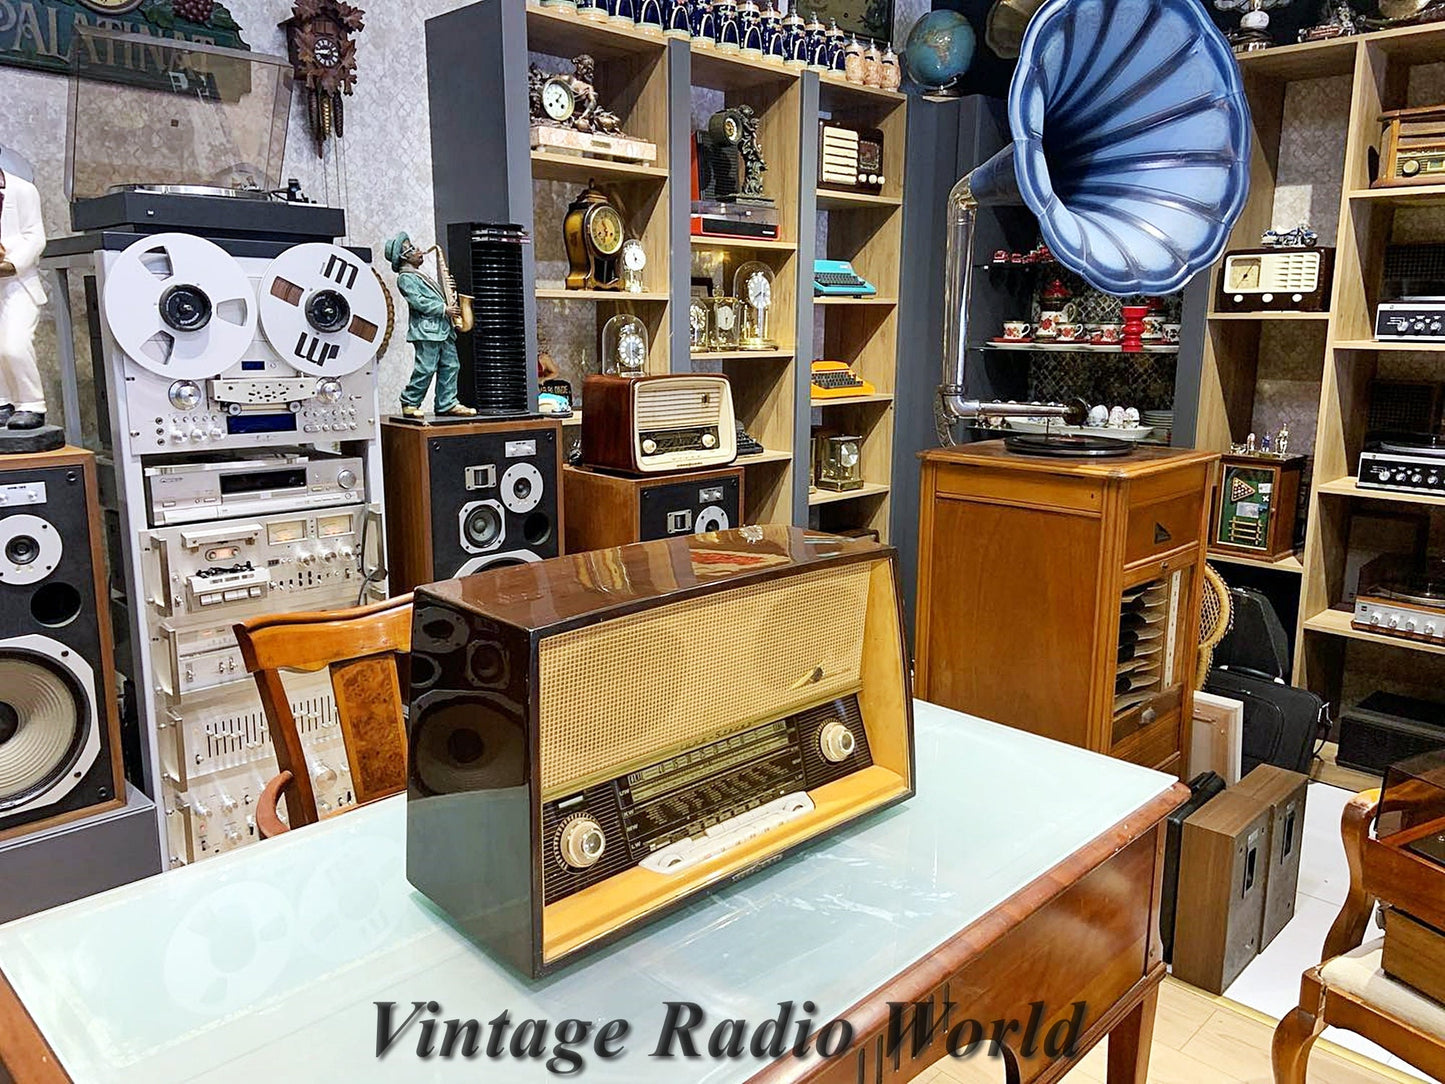 Loewe Opta Luna Vintage Radio: Nostalgic Charm with Modern Elegance